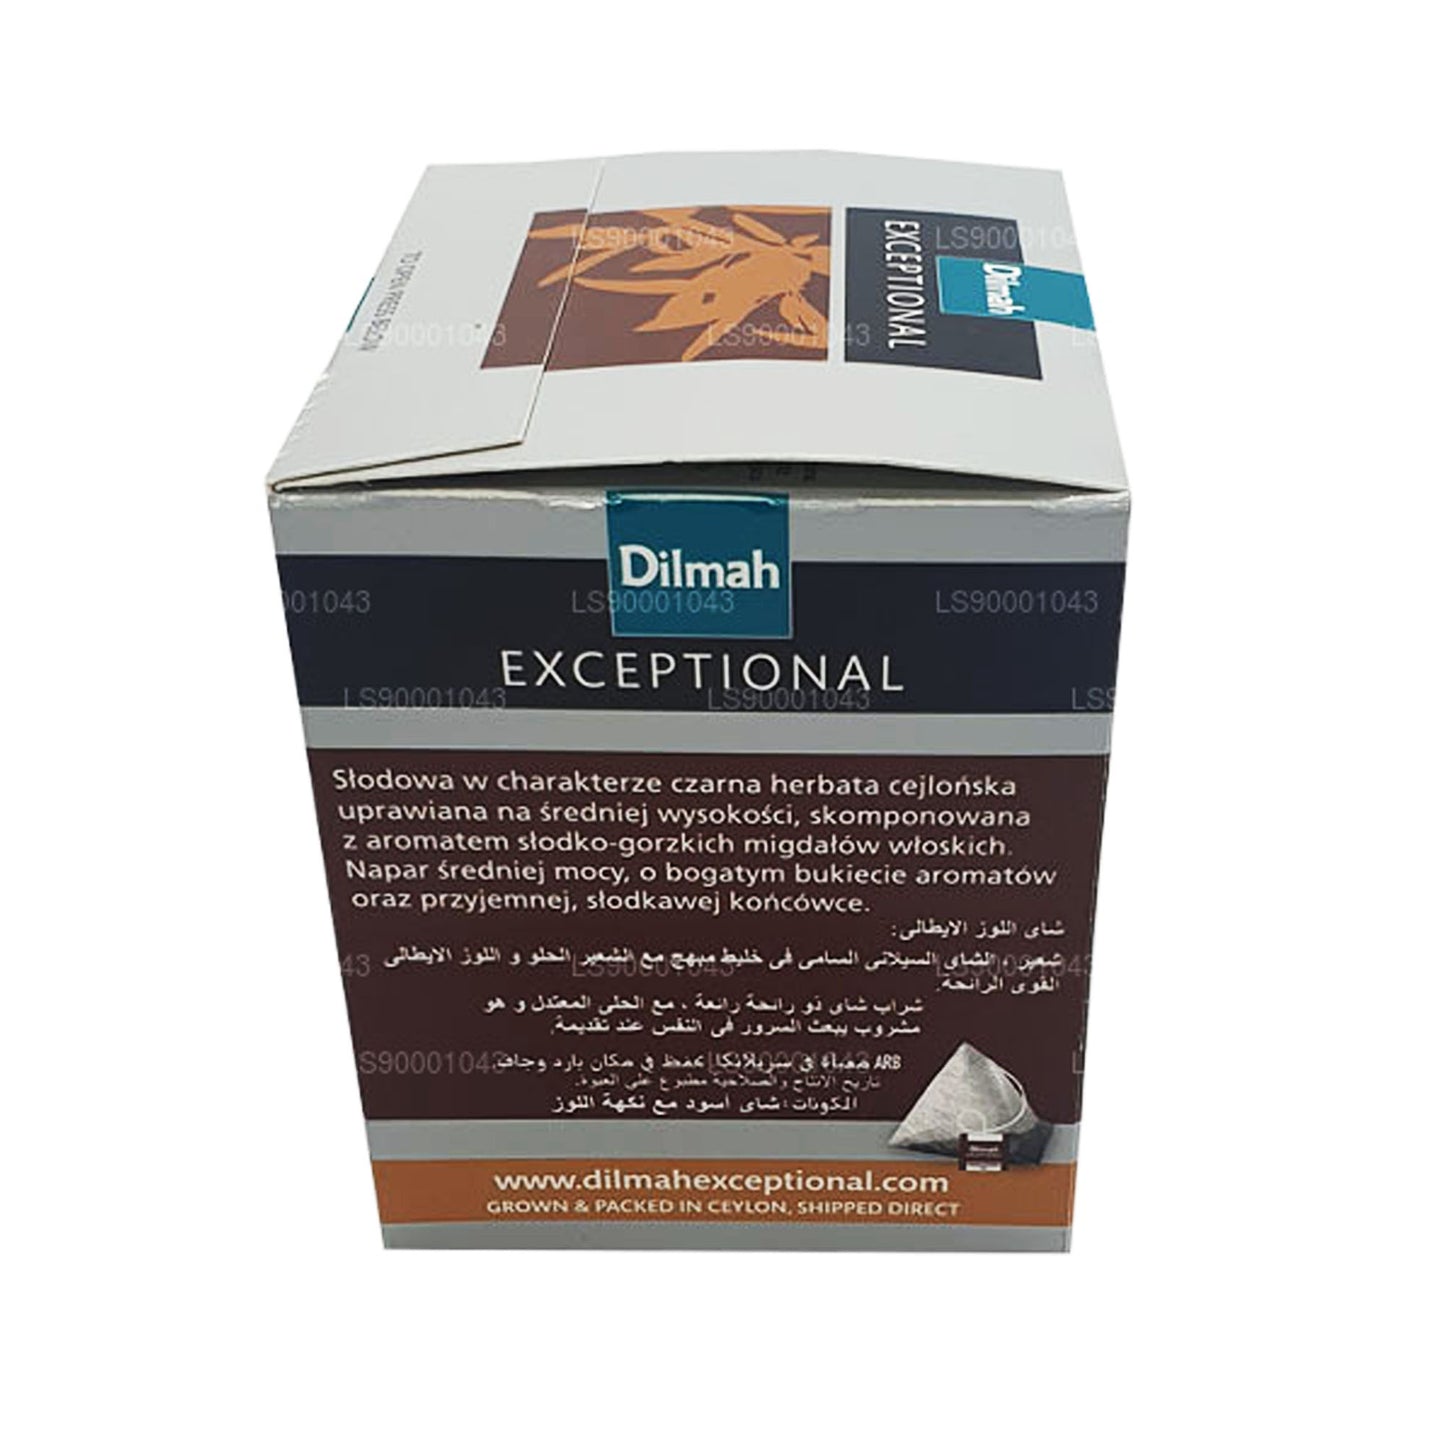 Dilmah Exceptional Italian Almond Real Leaf Tea (40g) 20 Tea Bags